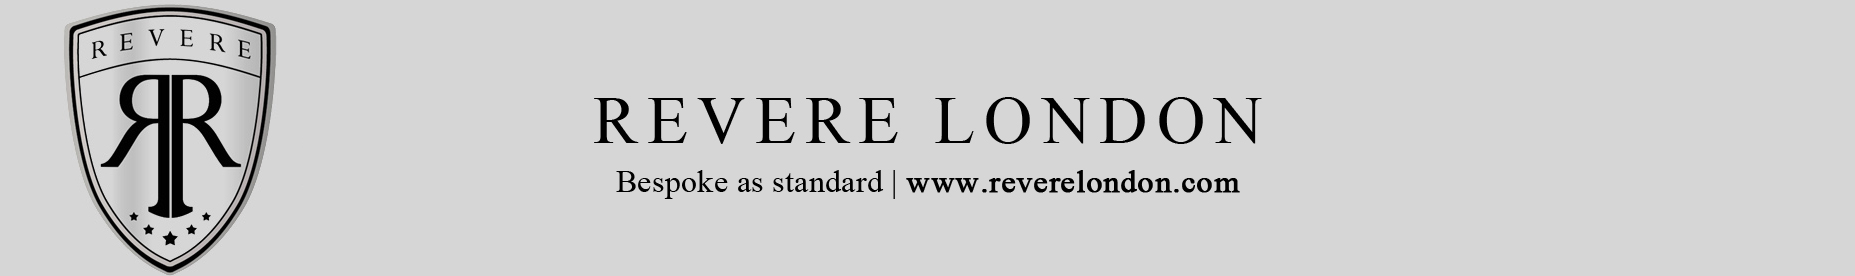 Revere London Craftsmanship Film - News - Revere London